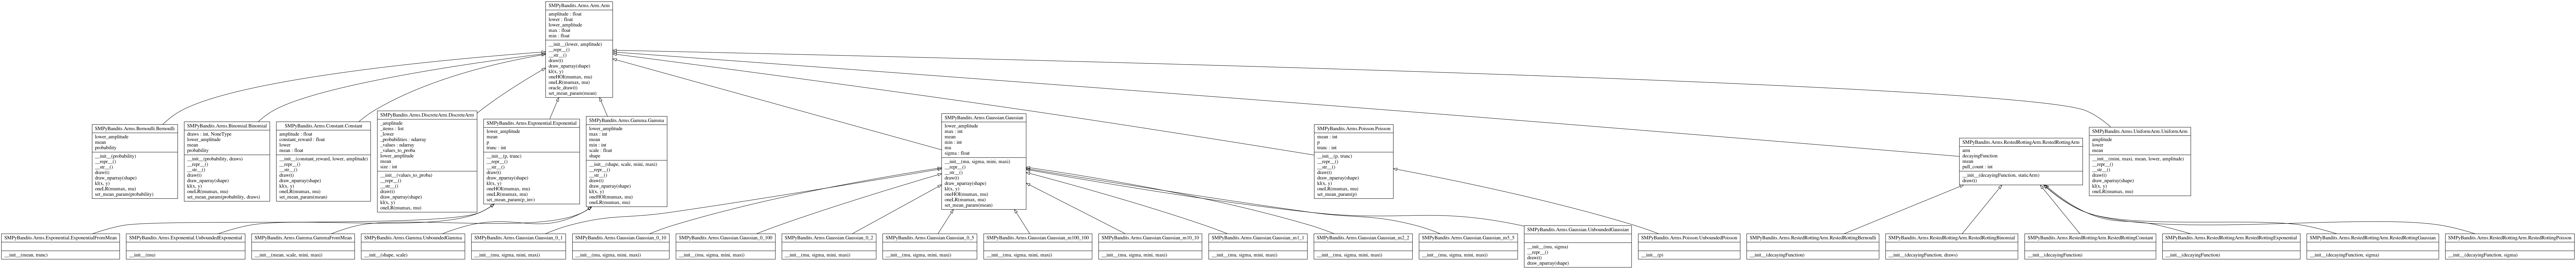 UML Diagram - classe SMPyBandits.Arms.png